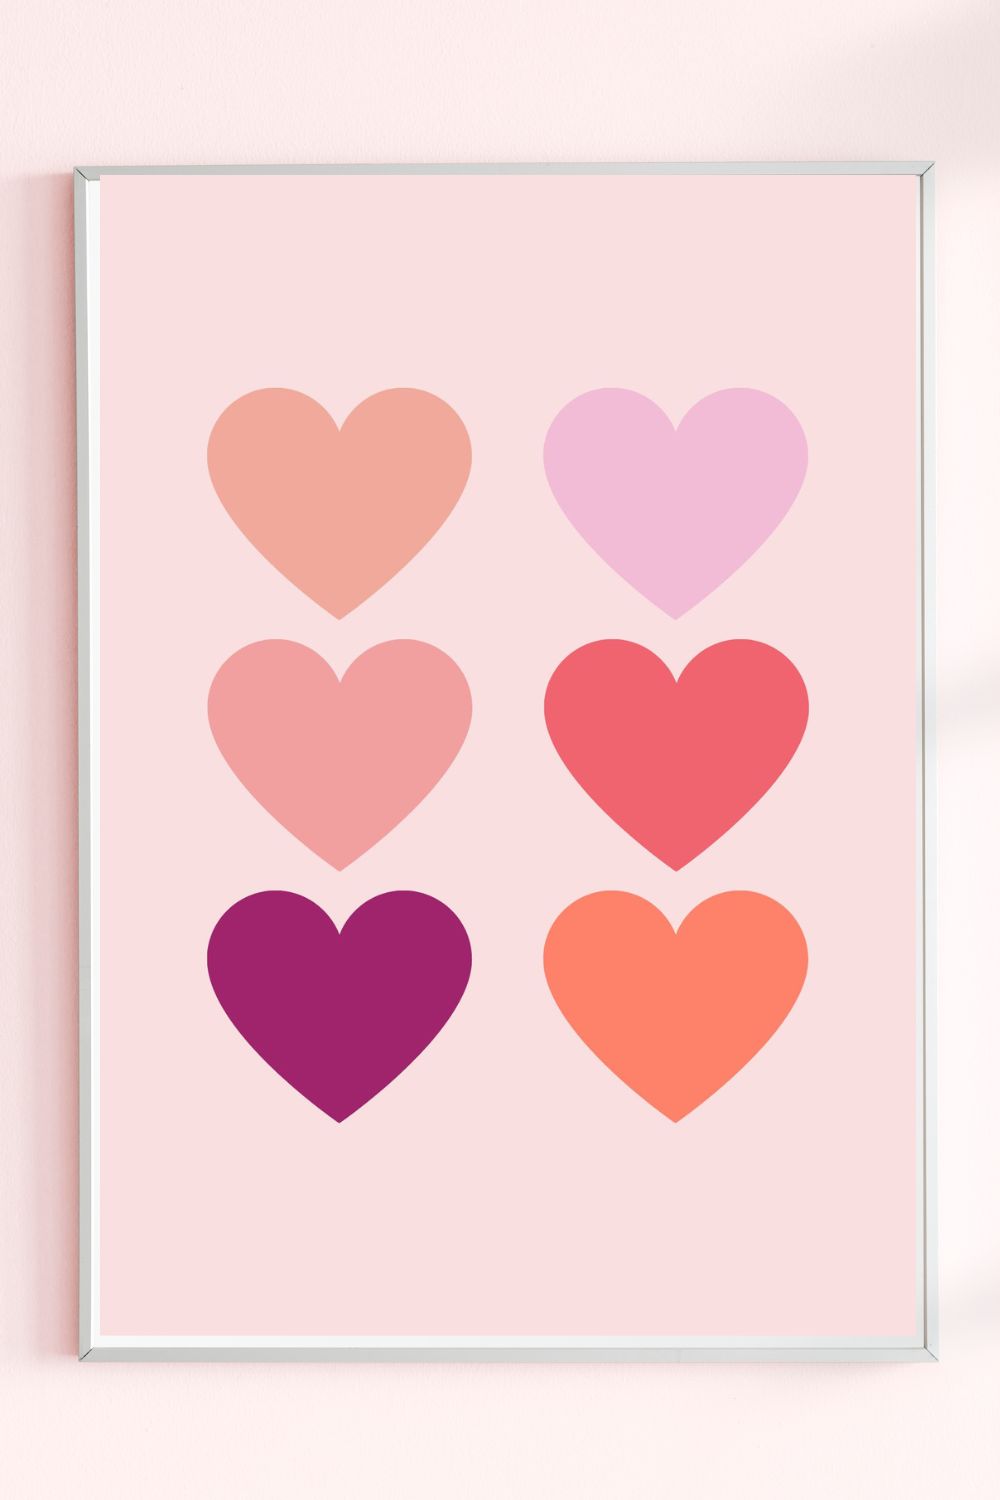 Modern Valentine Hearts Printable Wall Art, Valentine\'s Day, Valentines Day Decor, Classroom Decor, Nursery Decor, pink red heart - Digital pinterest preview image.